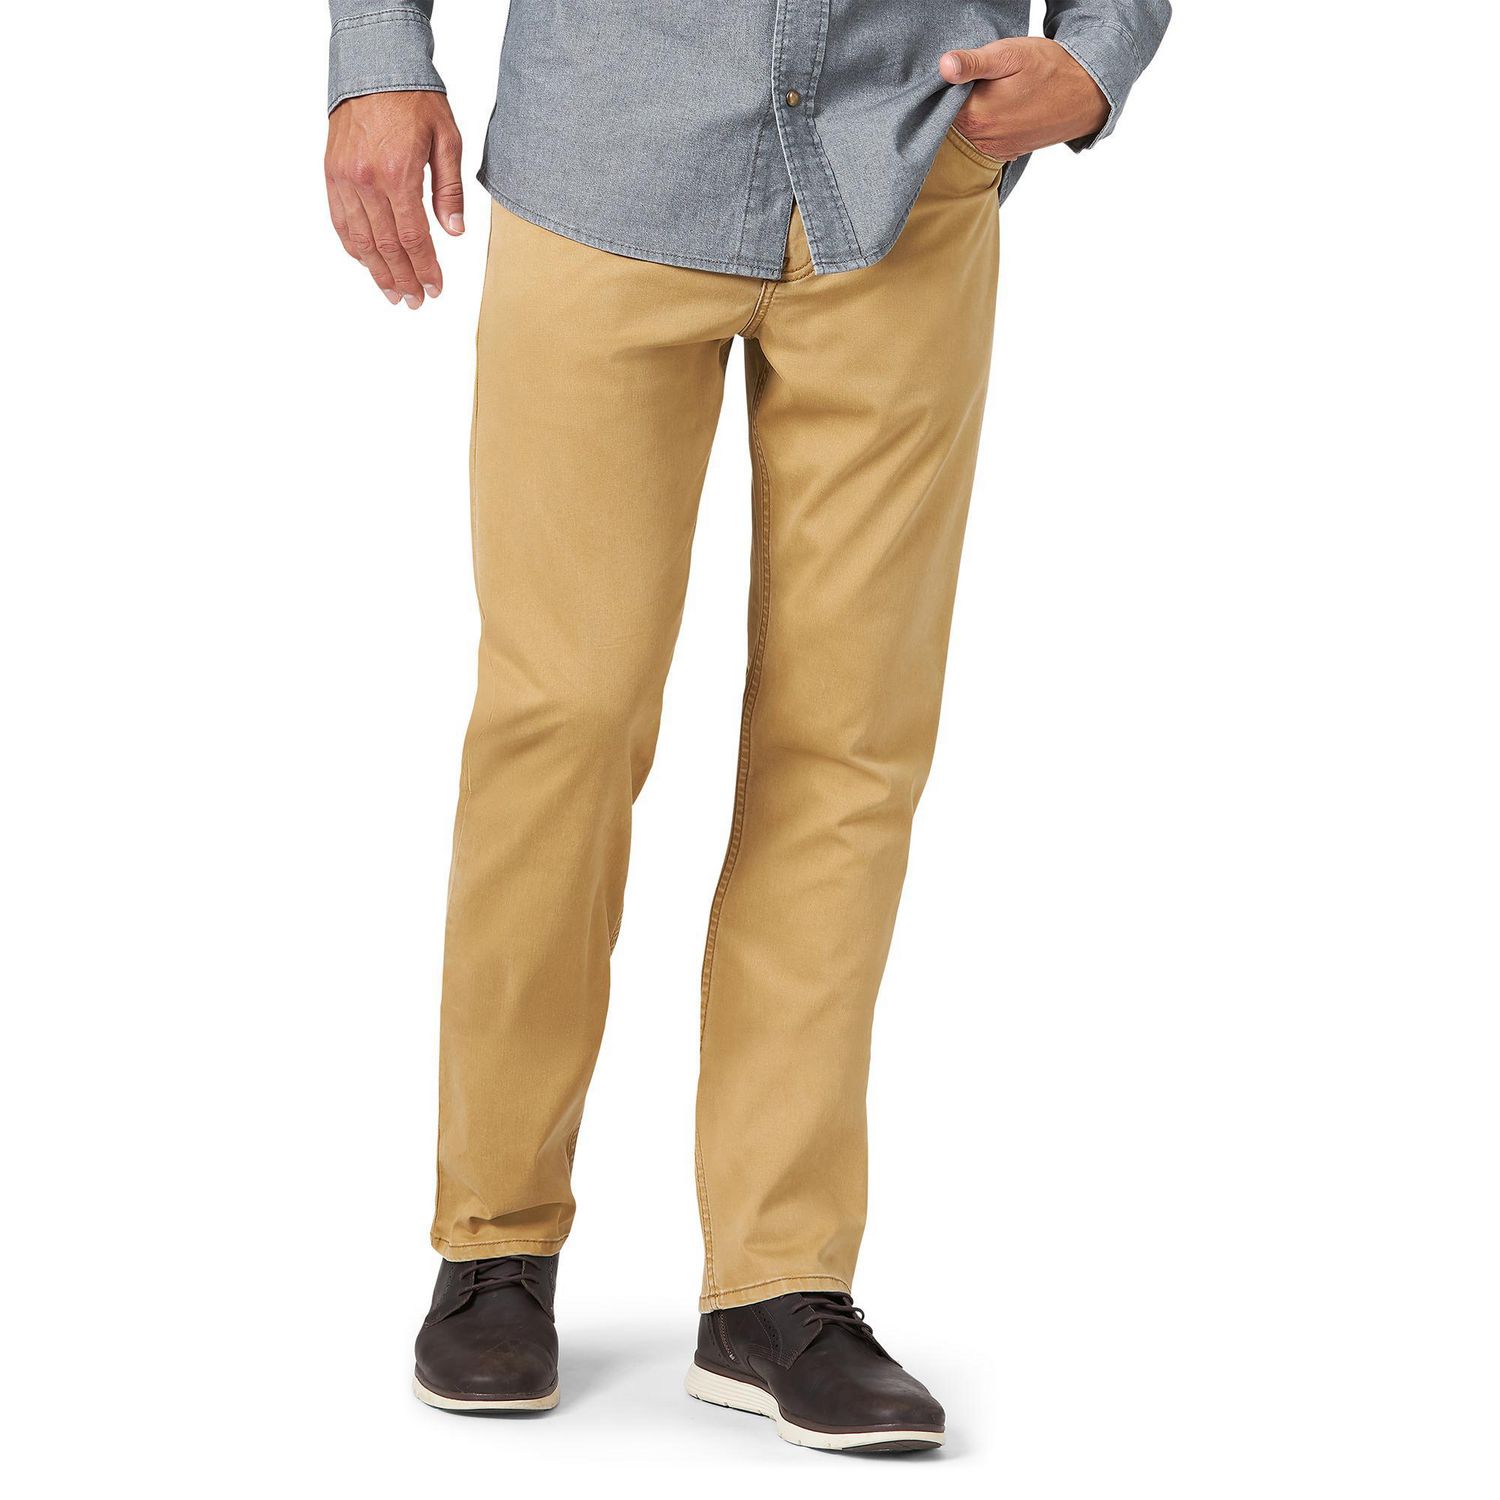 Buy Blue Trousers  Pants for Men by TWILLS Online  Ajiocom